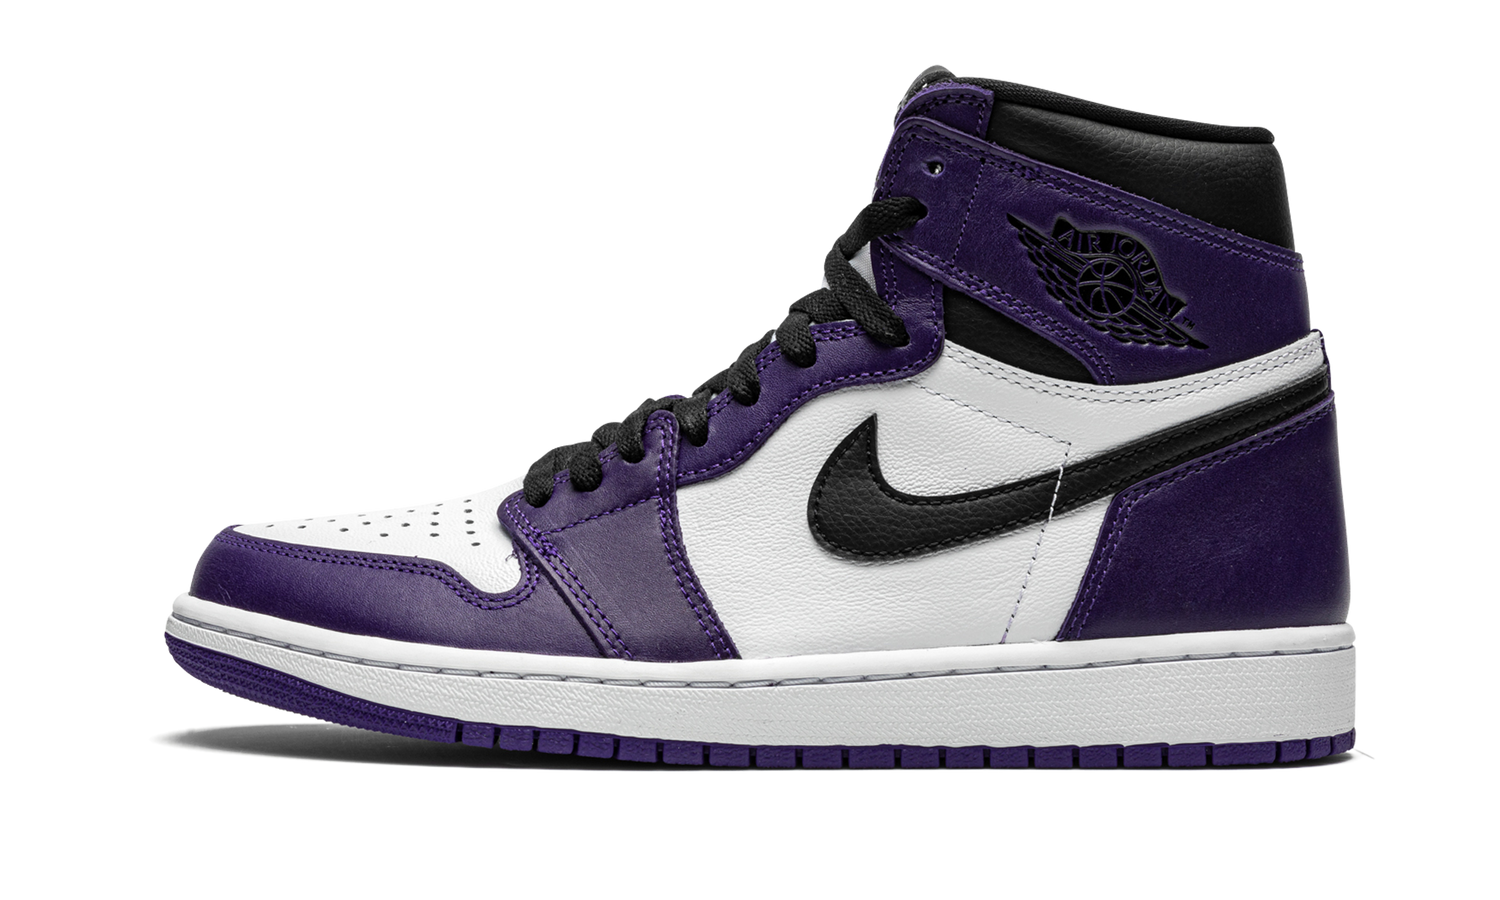 Jordan 1 High OG “Court Purple 2.0 